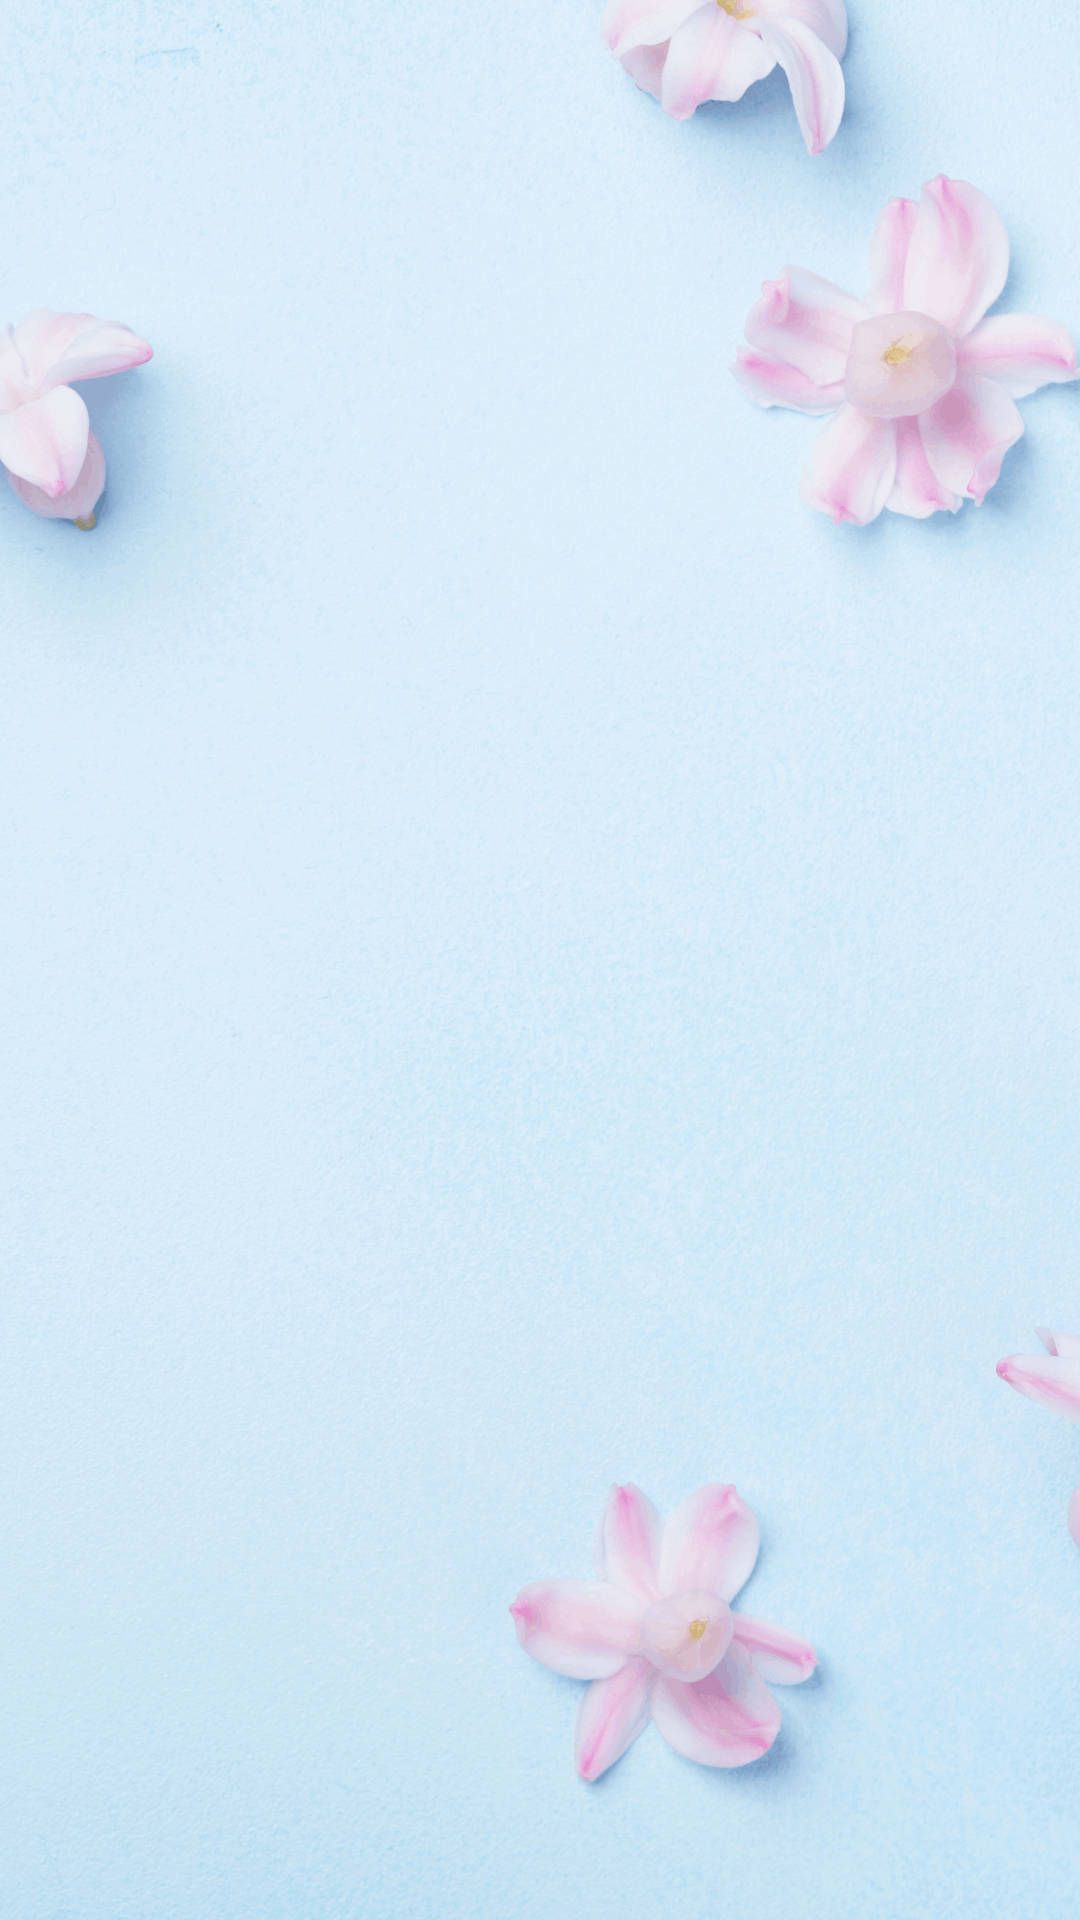 Light blue background with pink flowers. iPhone wallpaper - Light pink, pastel blue, light blue